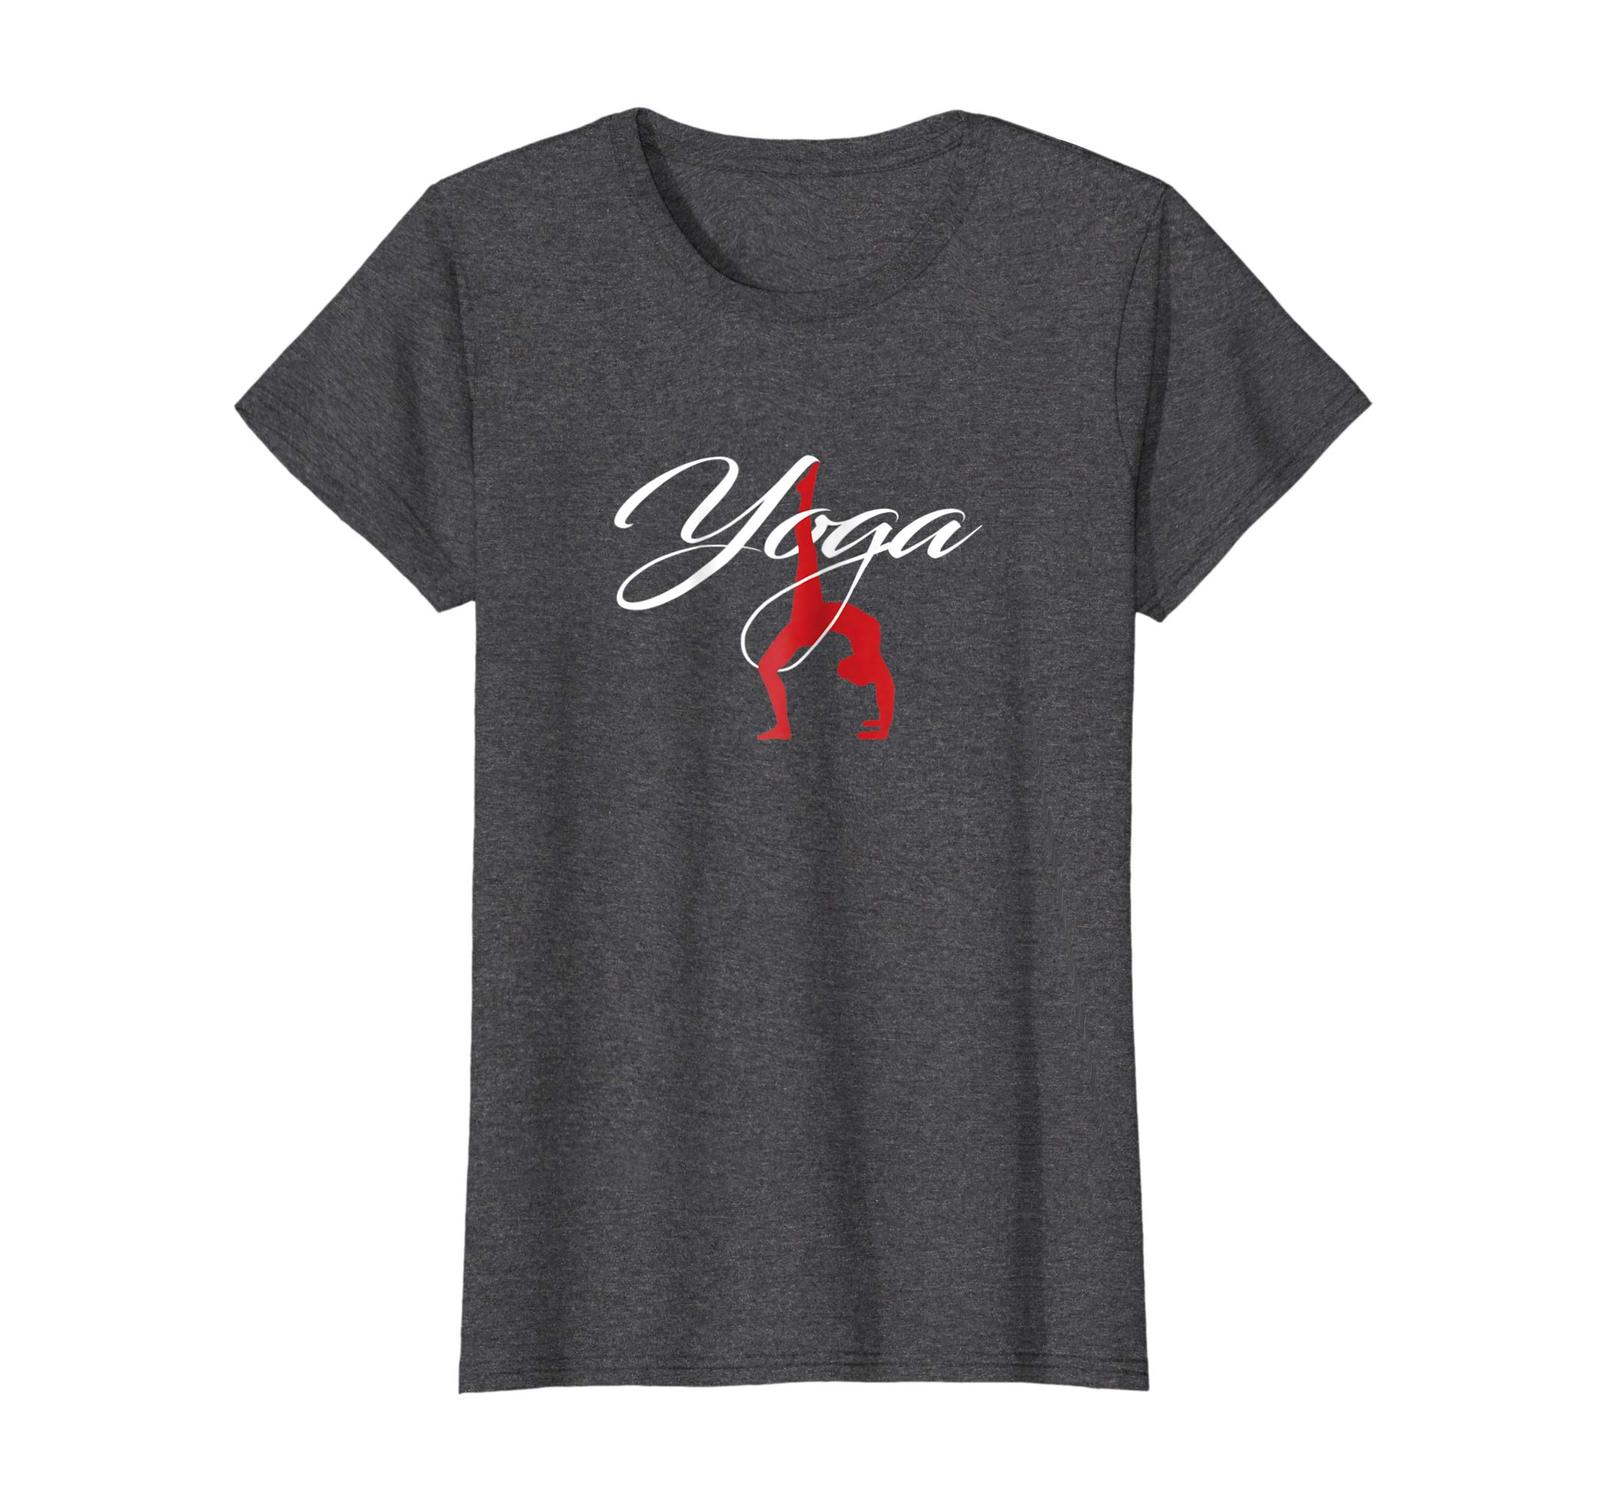 Dog Fashion - Yoga Meditation T-Shirt - Yoga Logo Shirt for Women Men Wowen